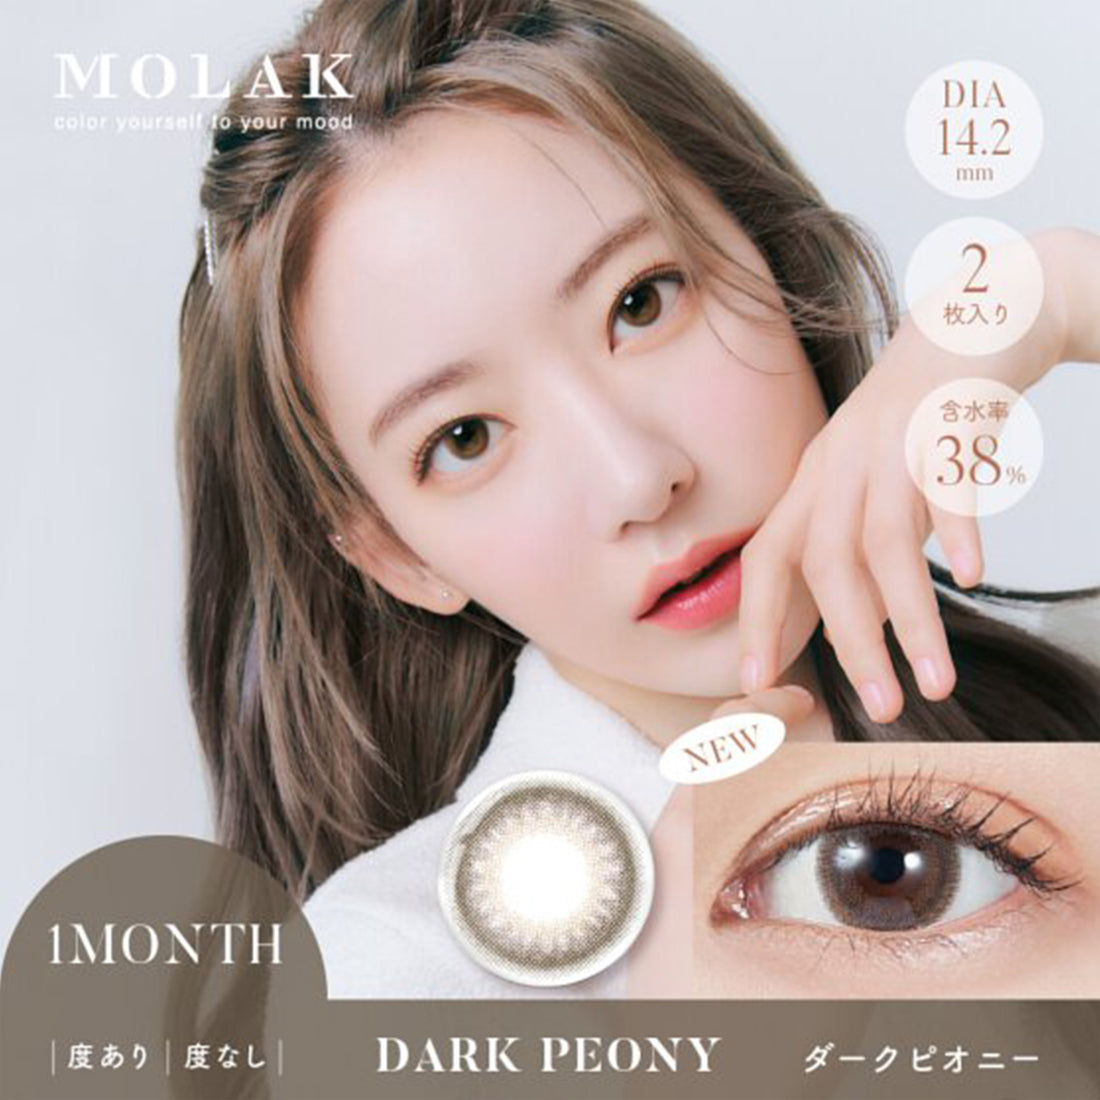 MOLAK 1 Month Color Lens-Dark Peony 2lenses